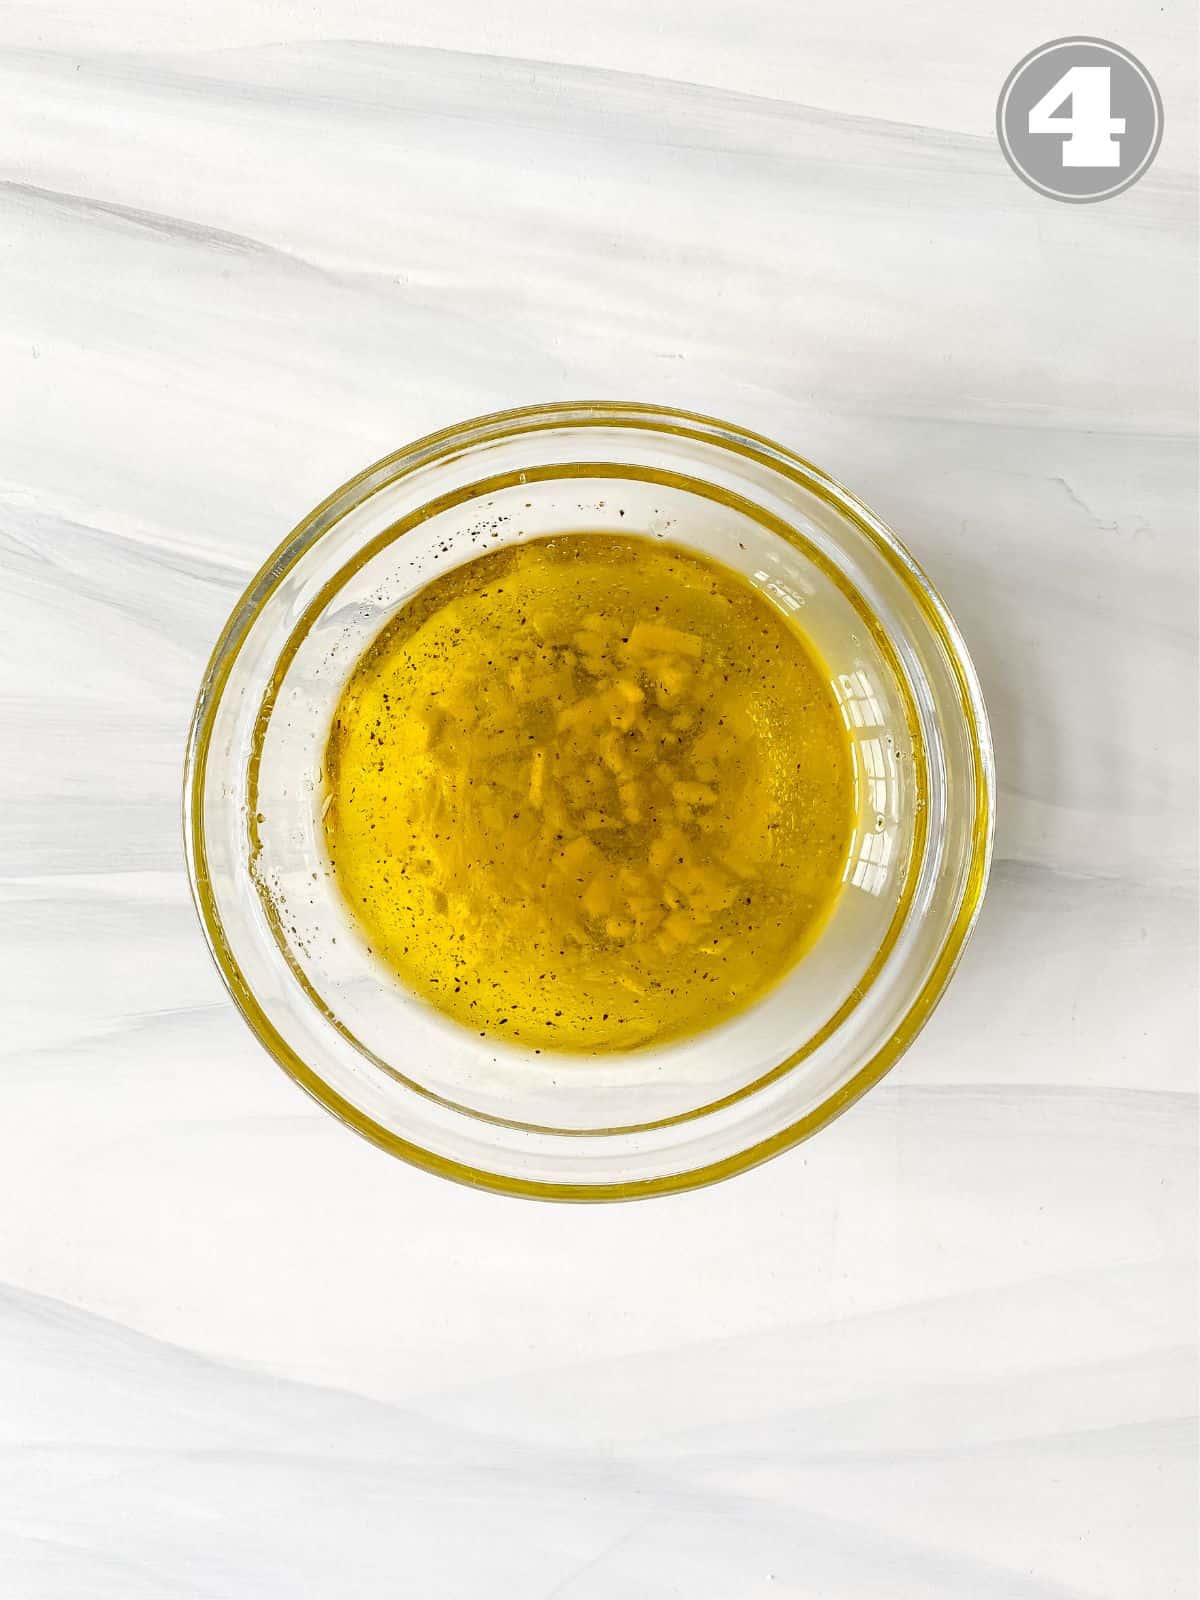 olive oil vinaigrette in a glass bowl.